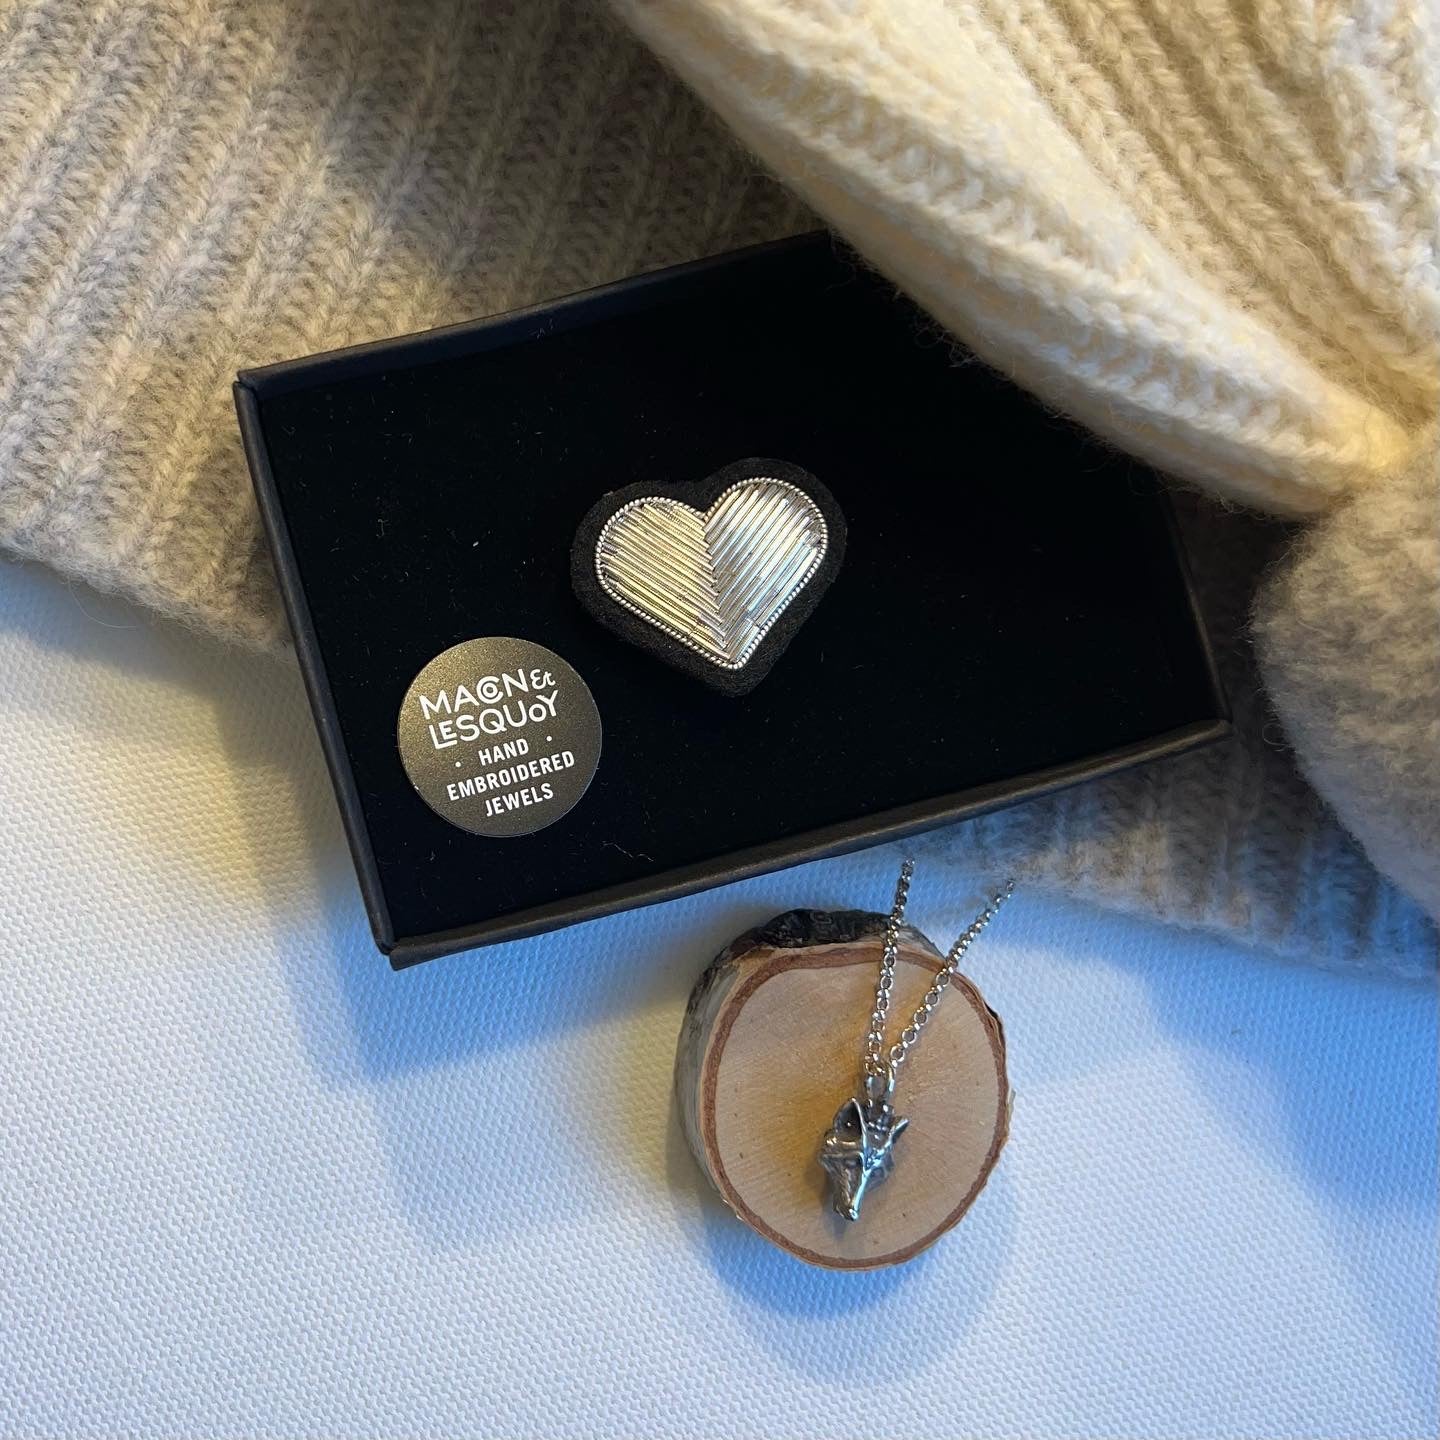 Macon & Les Quoy SILVER HEART - small brooche pin